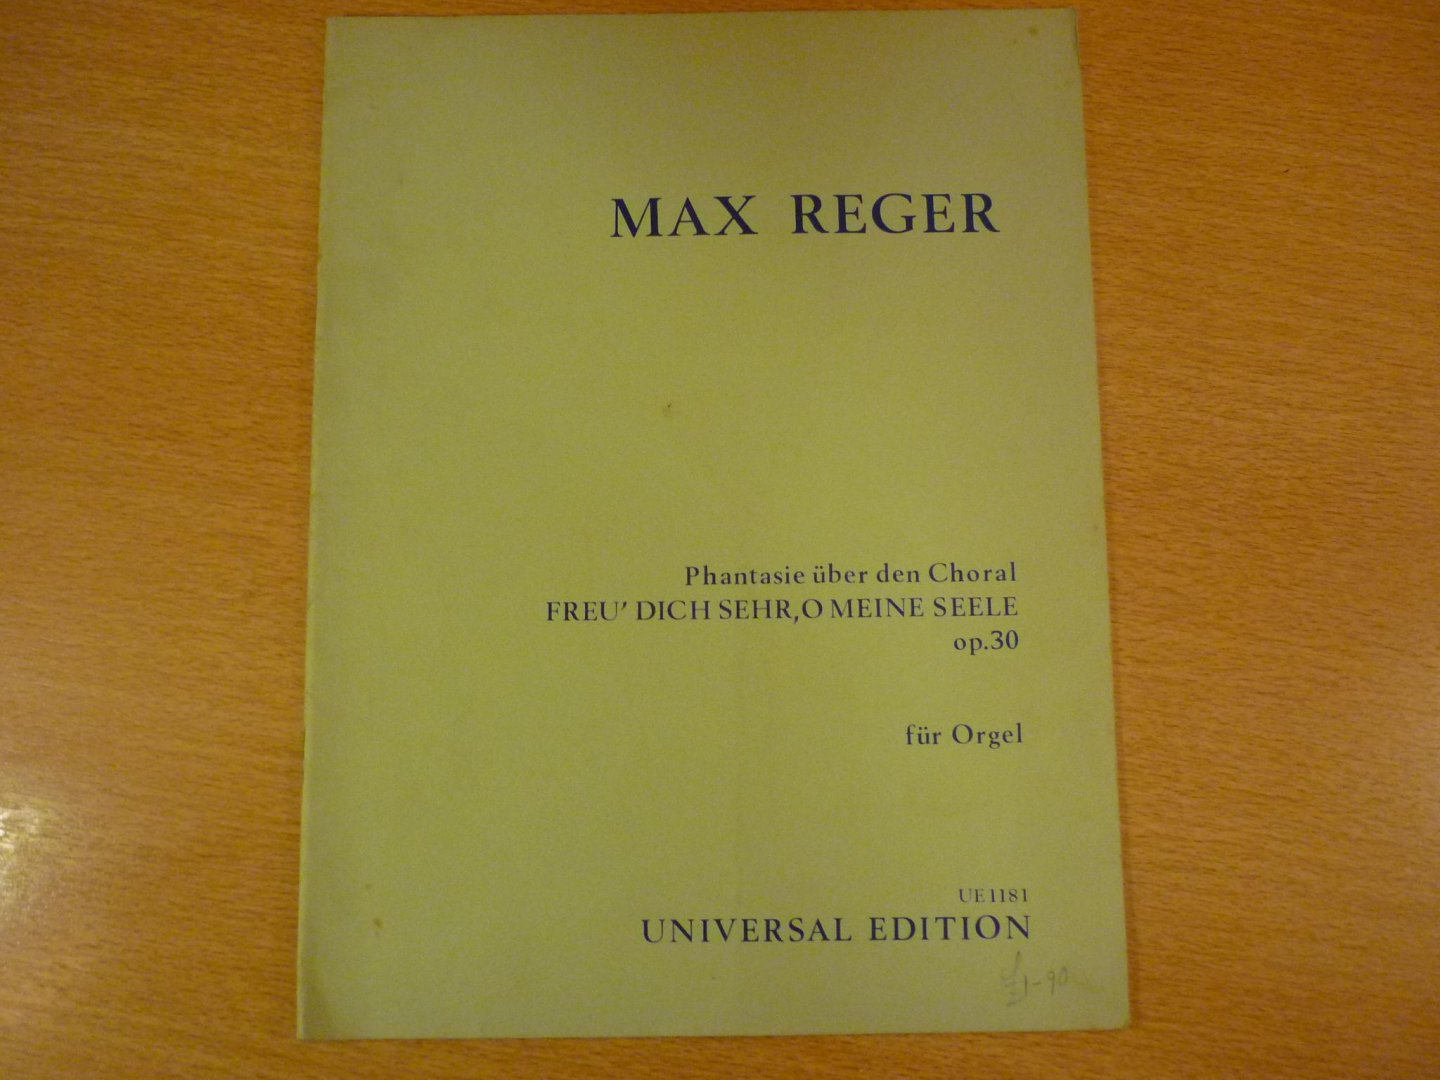 Reger; Max (1873 - 1916) - Phantasie uber den Choral "Freu' dich sehr, o meine seele" - Op.30; fur Orgel